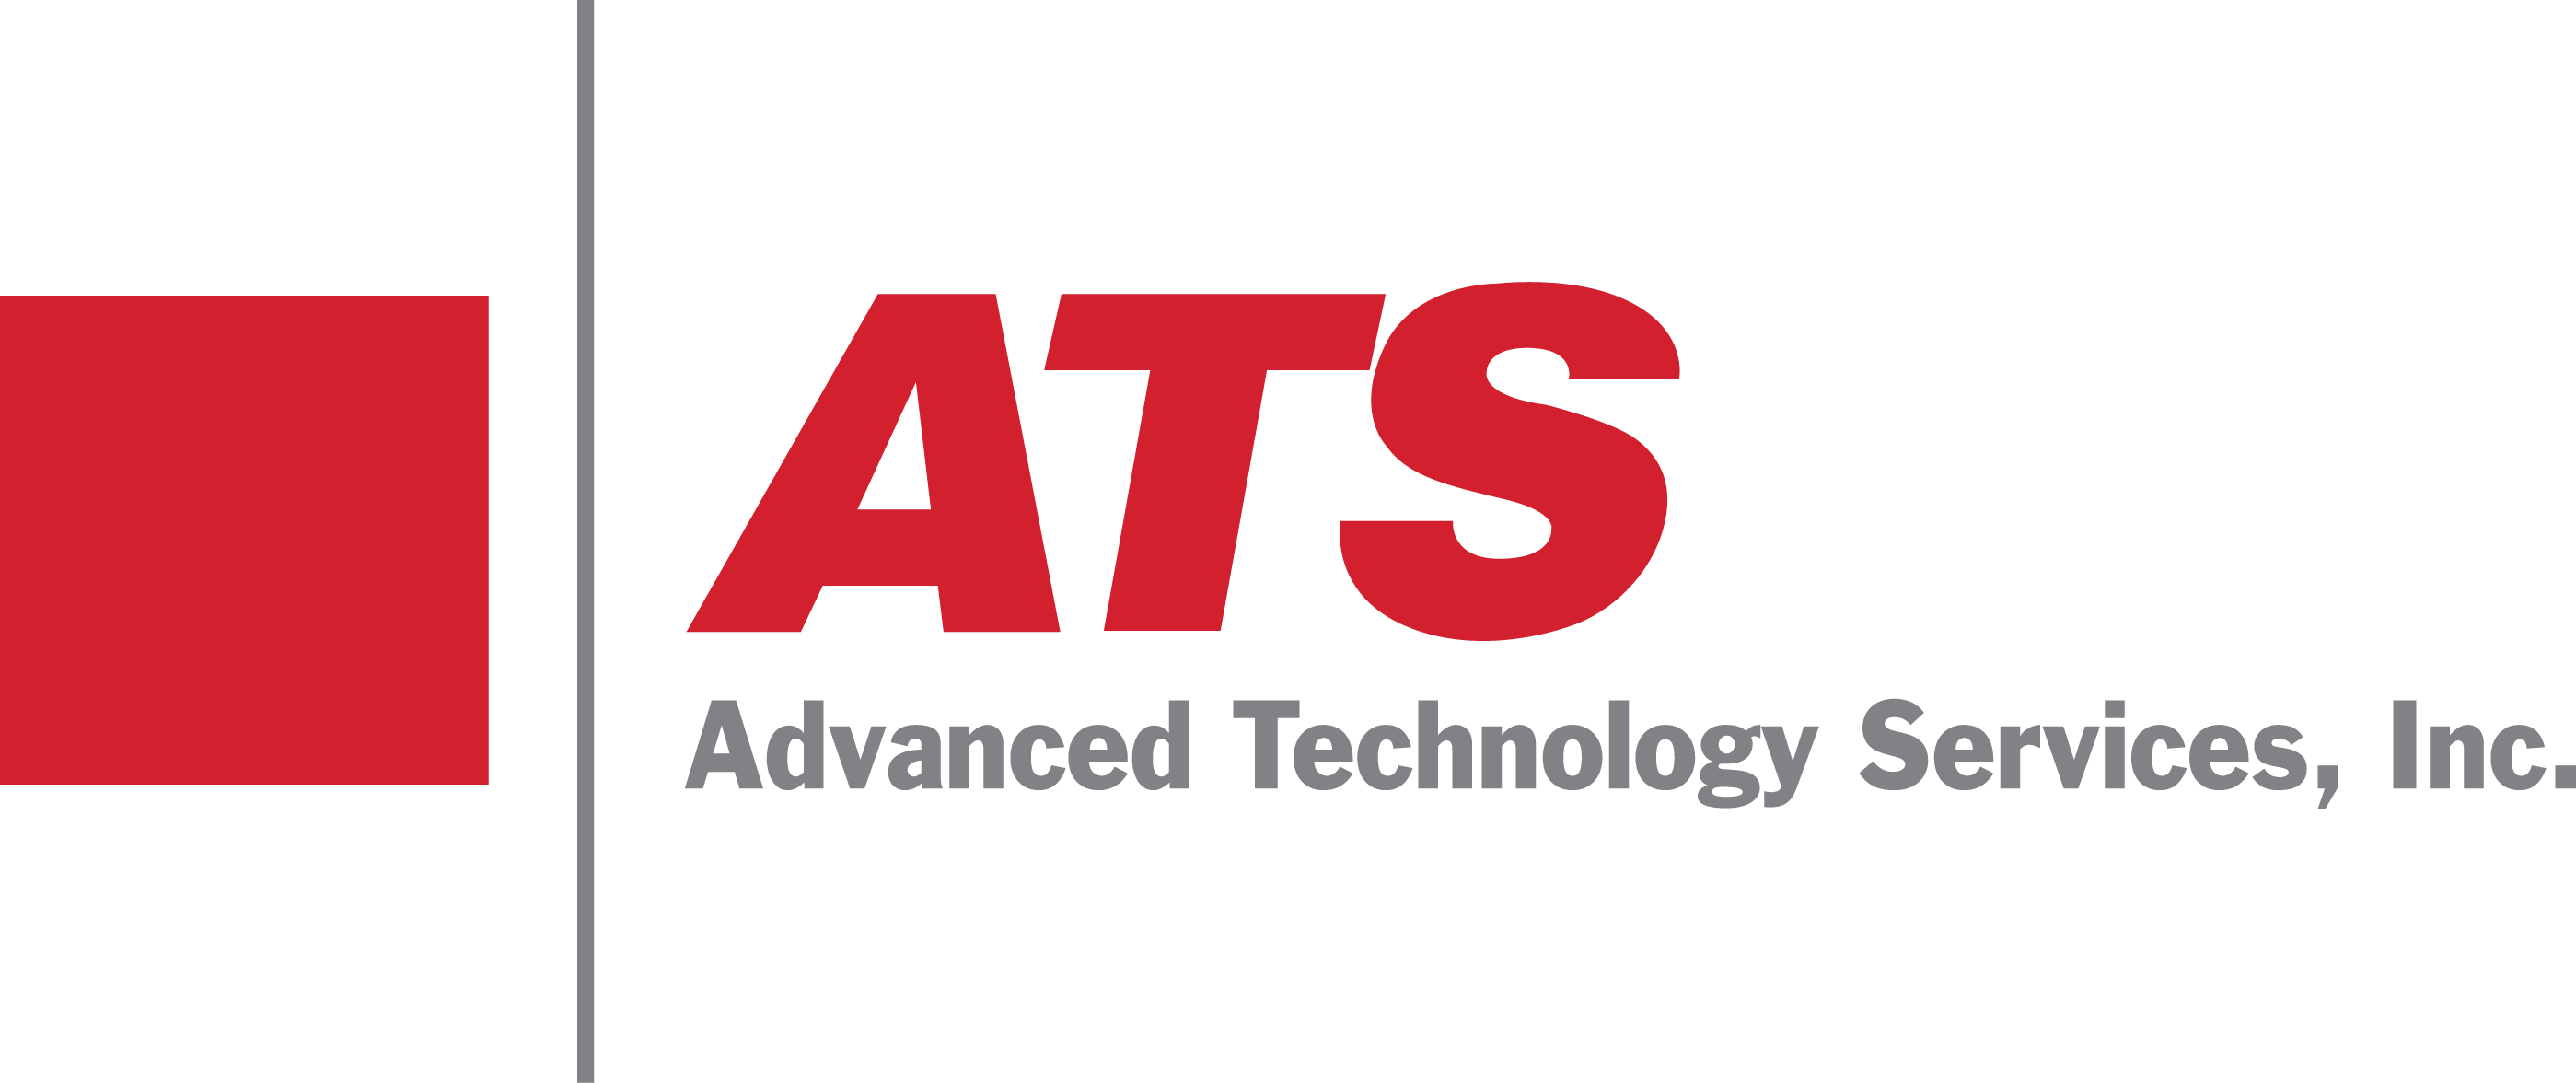 ATS Logo - Factory Maintenance & MRO Services. Advanced Technology Services